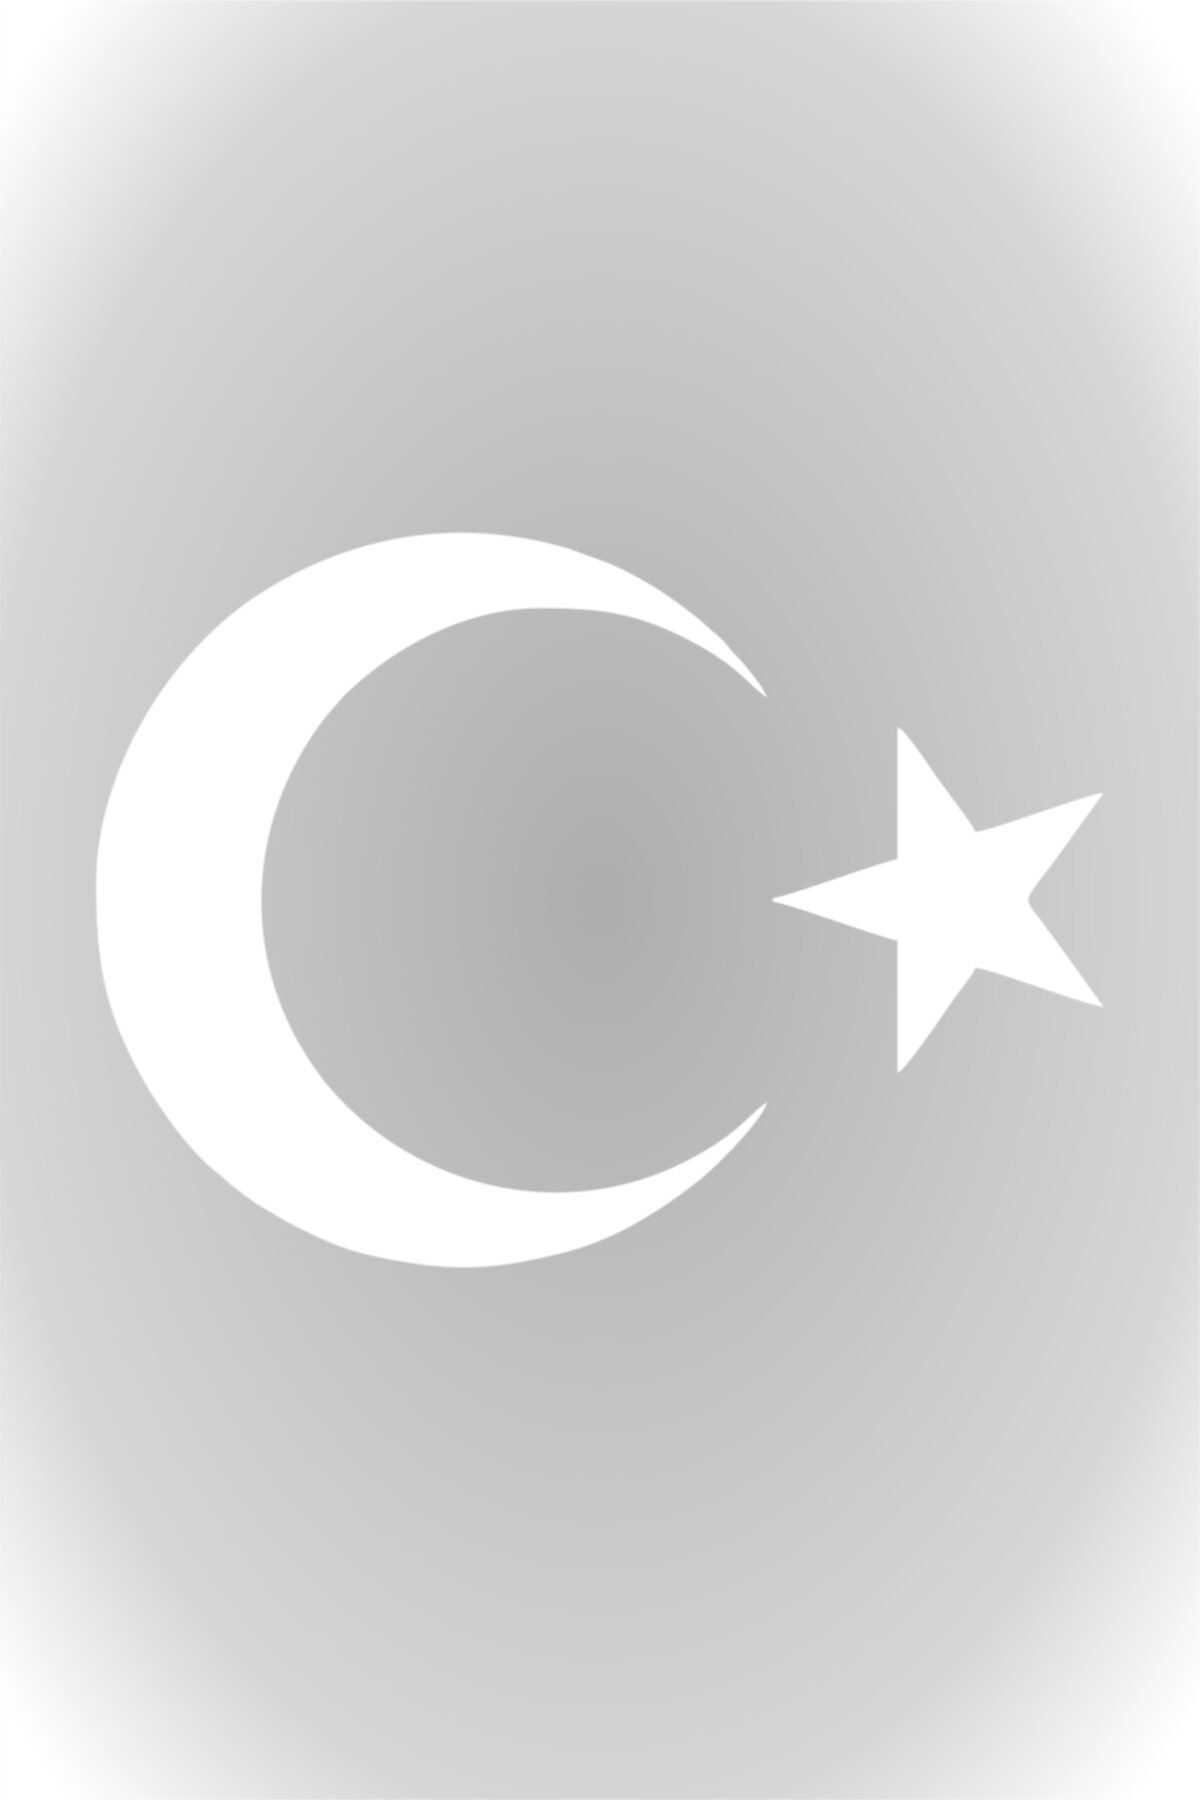 Quart Aksesuar Ay Yıldız Sticker Türk Bayrağı Sticker 10 X 7,5 Cm Beyaz